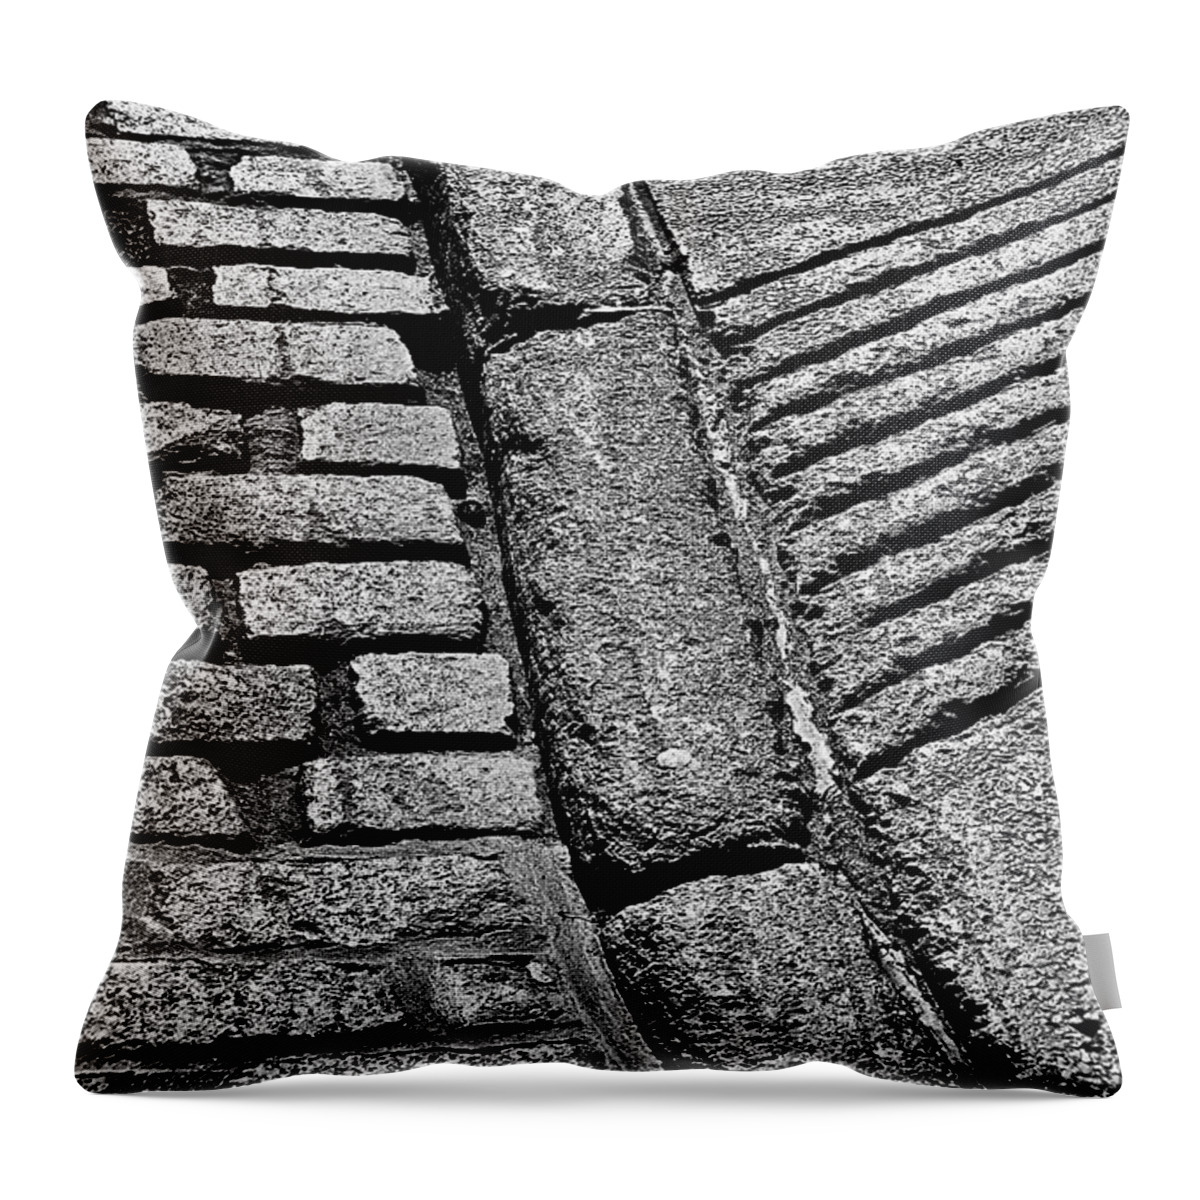 Bricks Throw Pillow featuring the photograph Curbside by Burney Lieberman